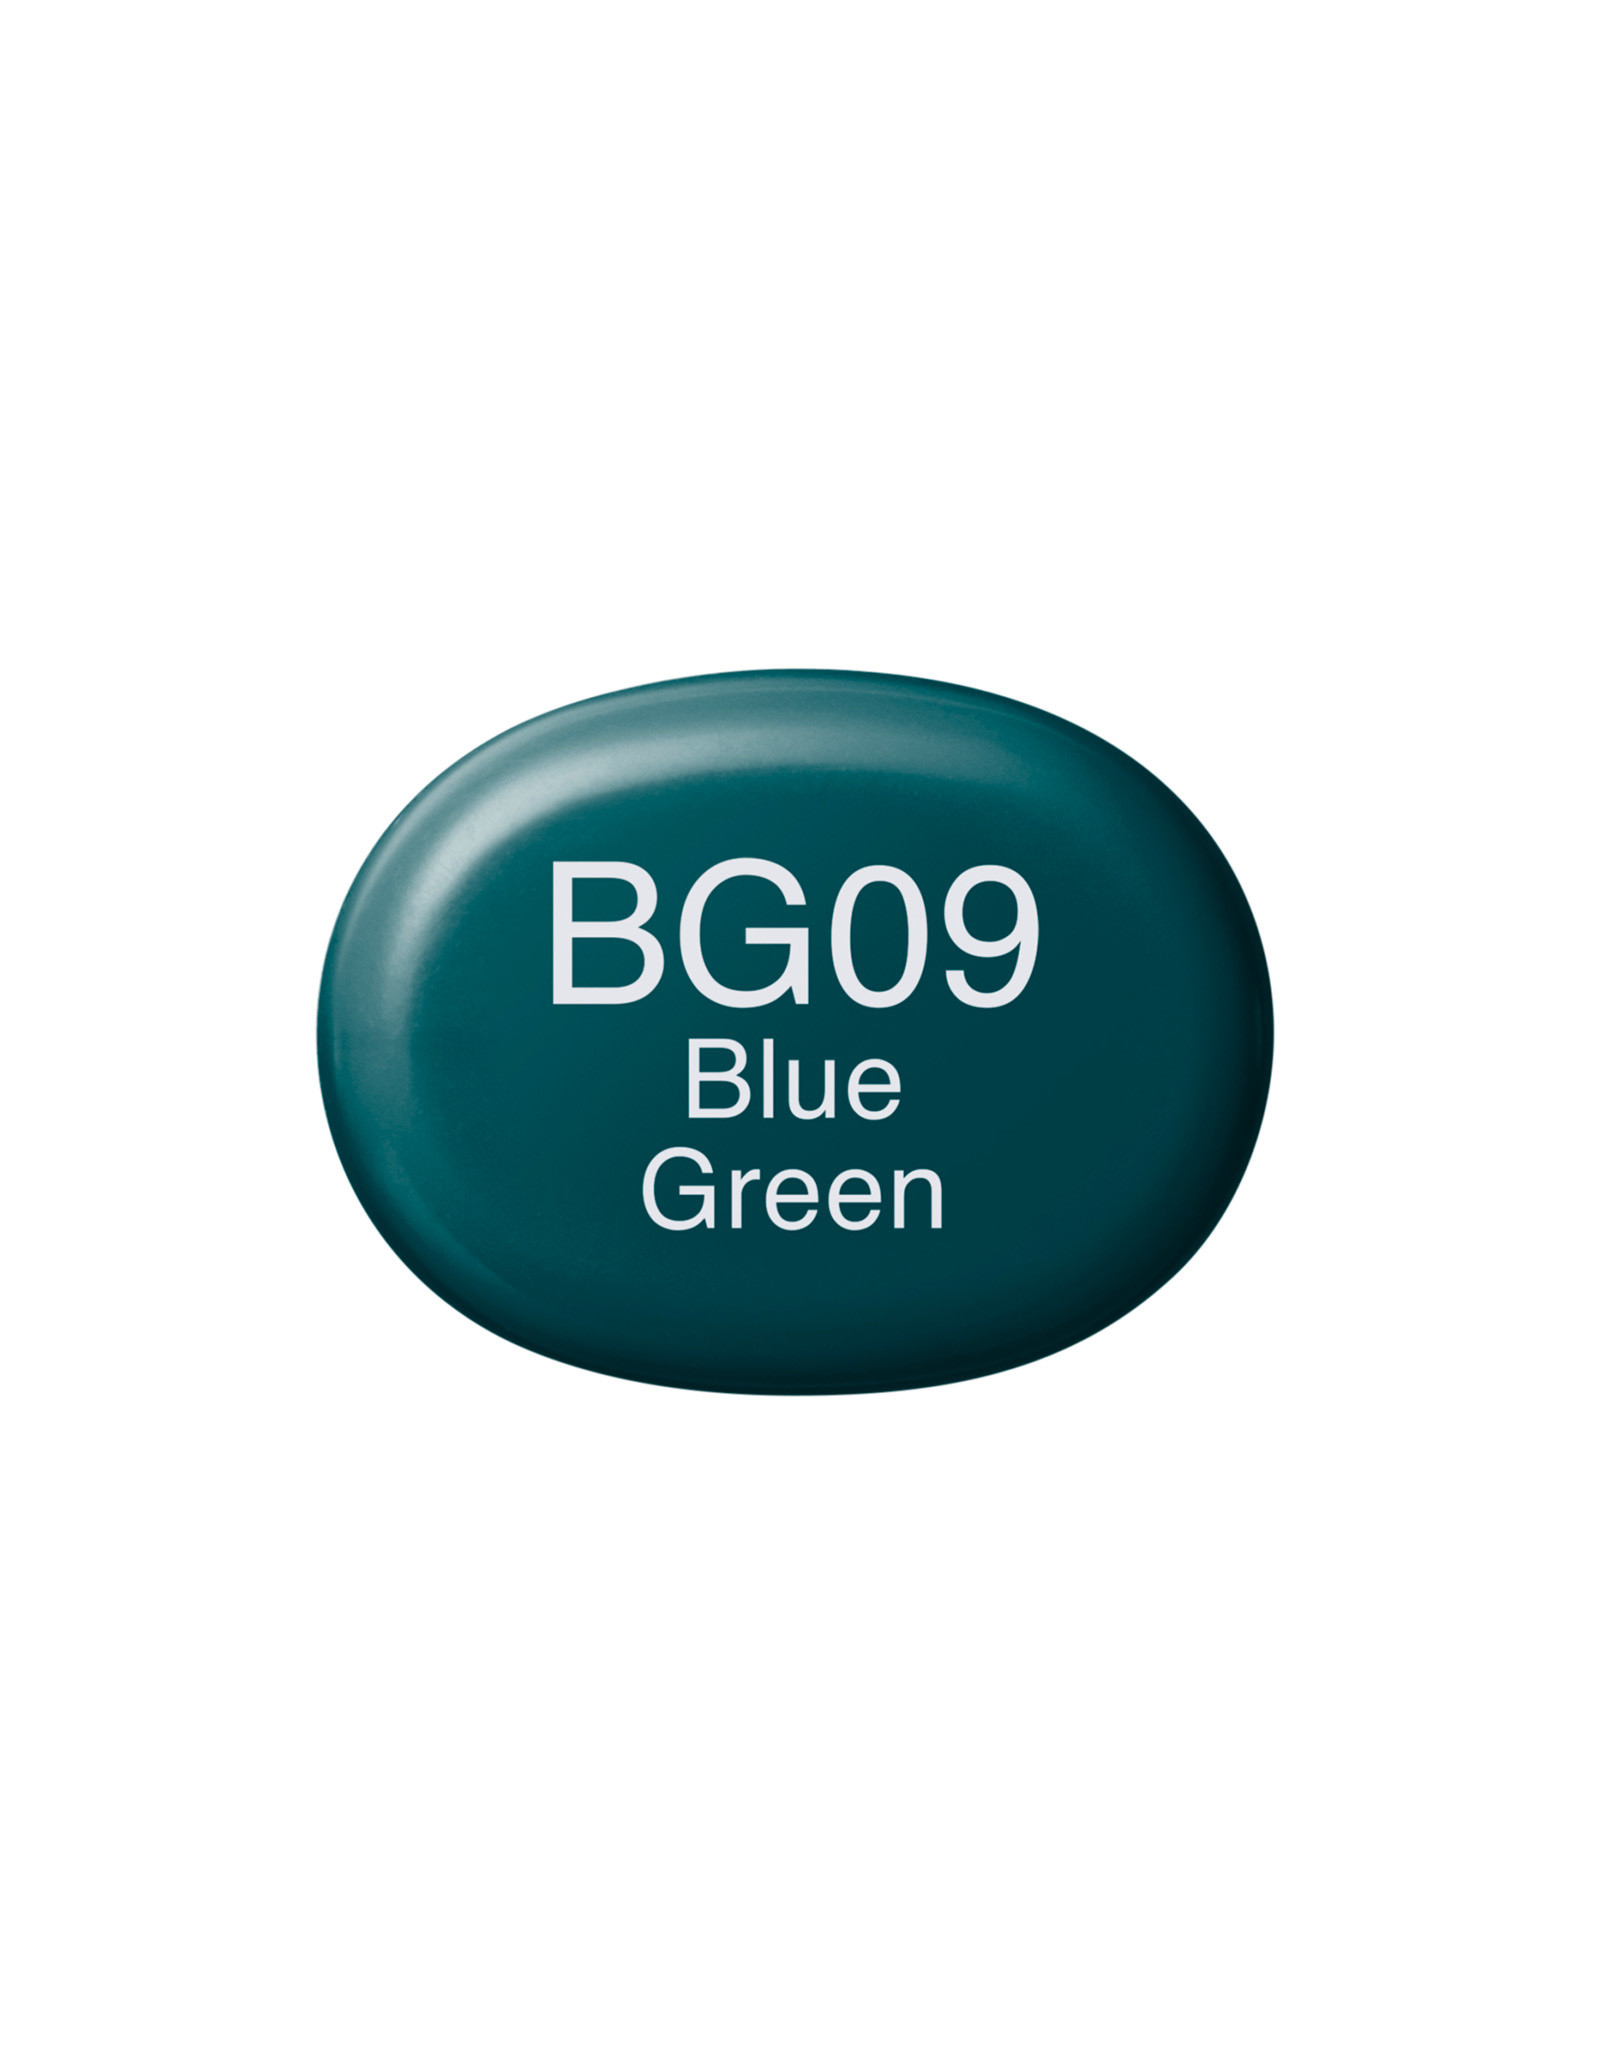 COPIC COPIC Sketch Marker BG09 Blue Green